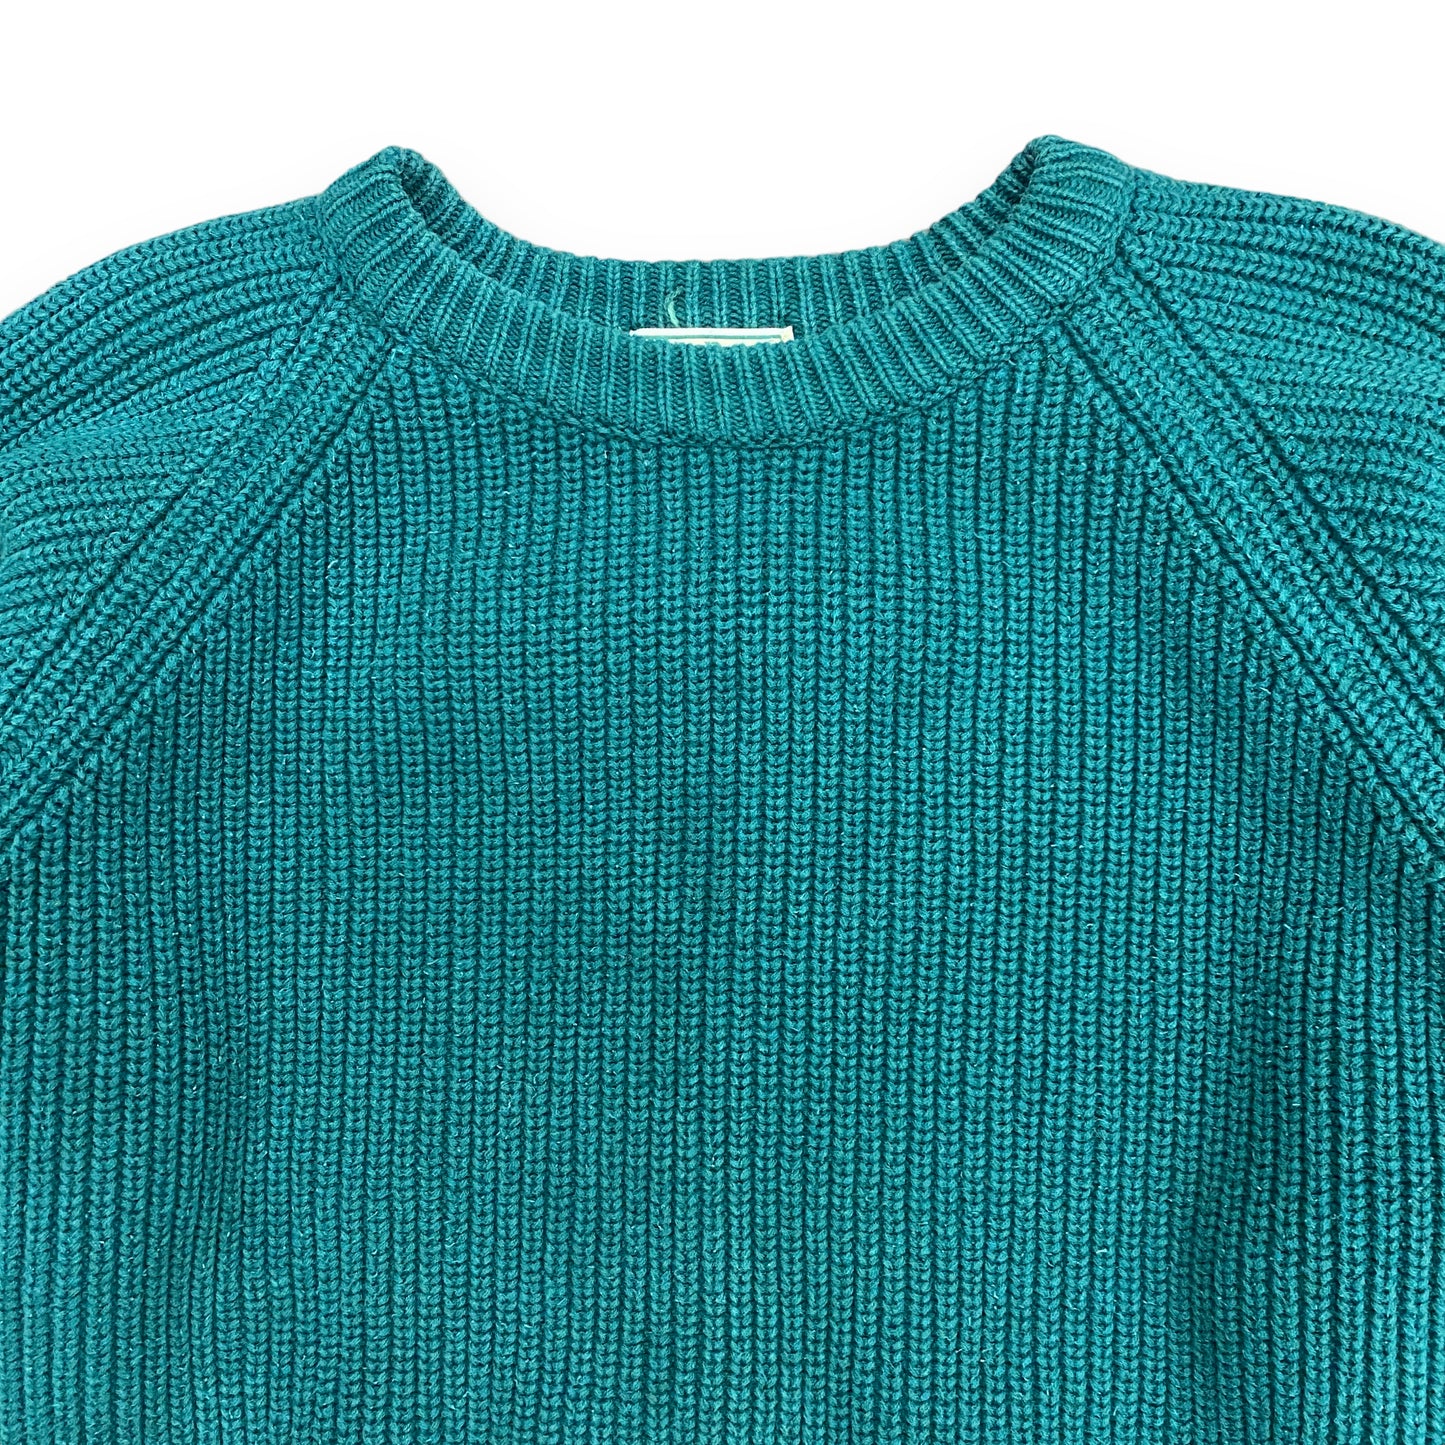 1990s LL Bean Dark Green Knit Sweater - Size Medium